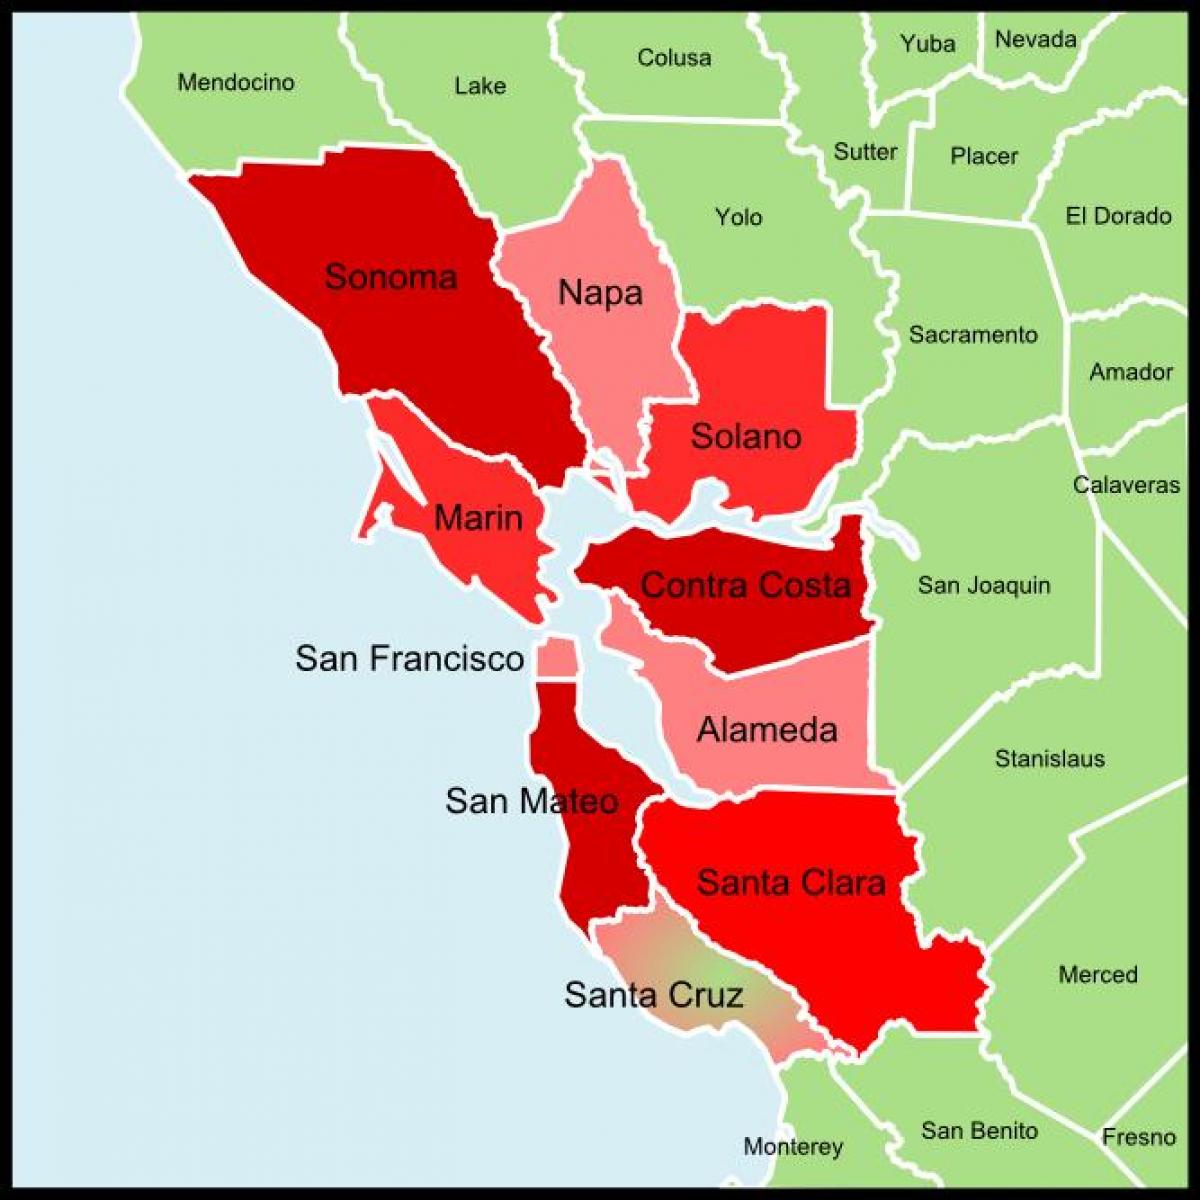 San Francisco bay area eskualdeko mapa